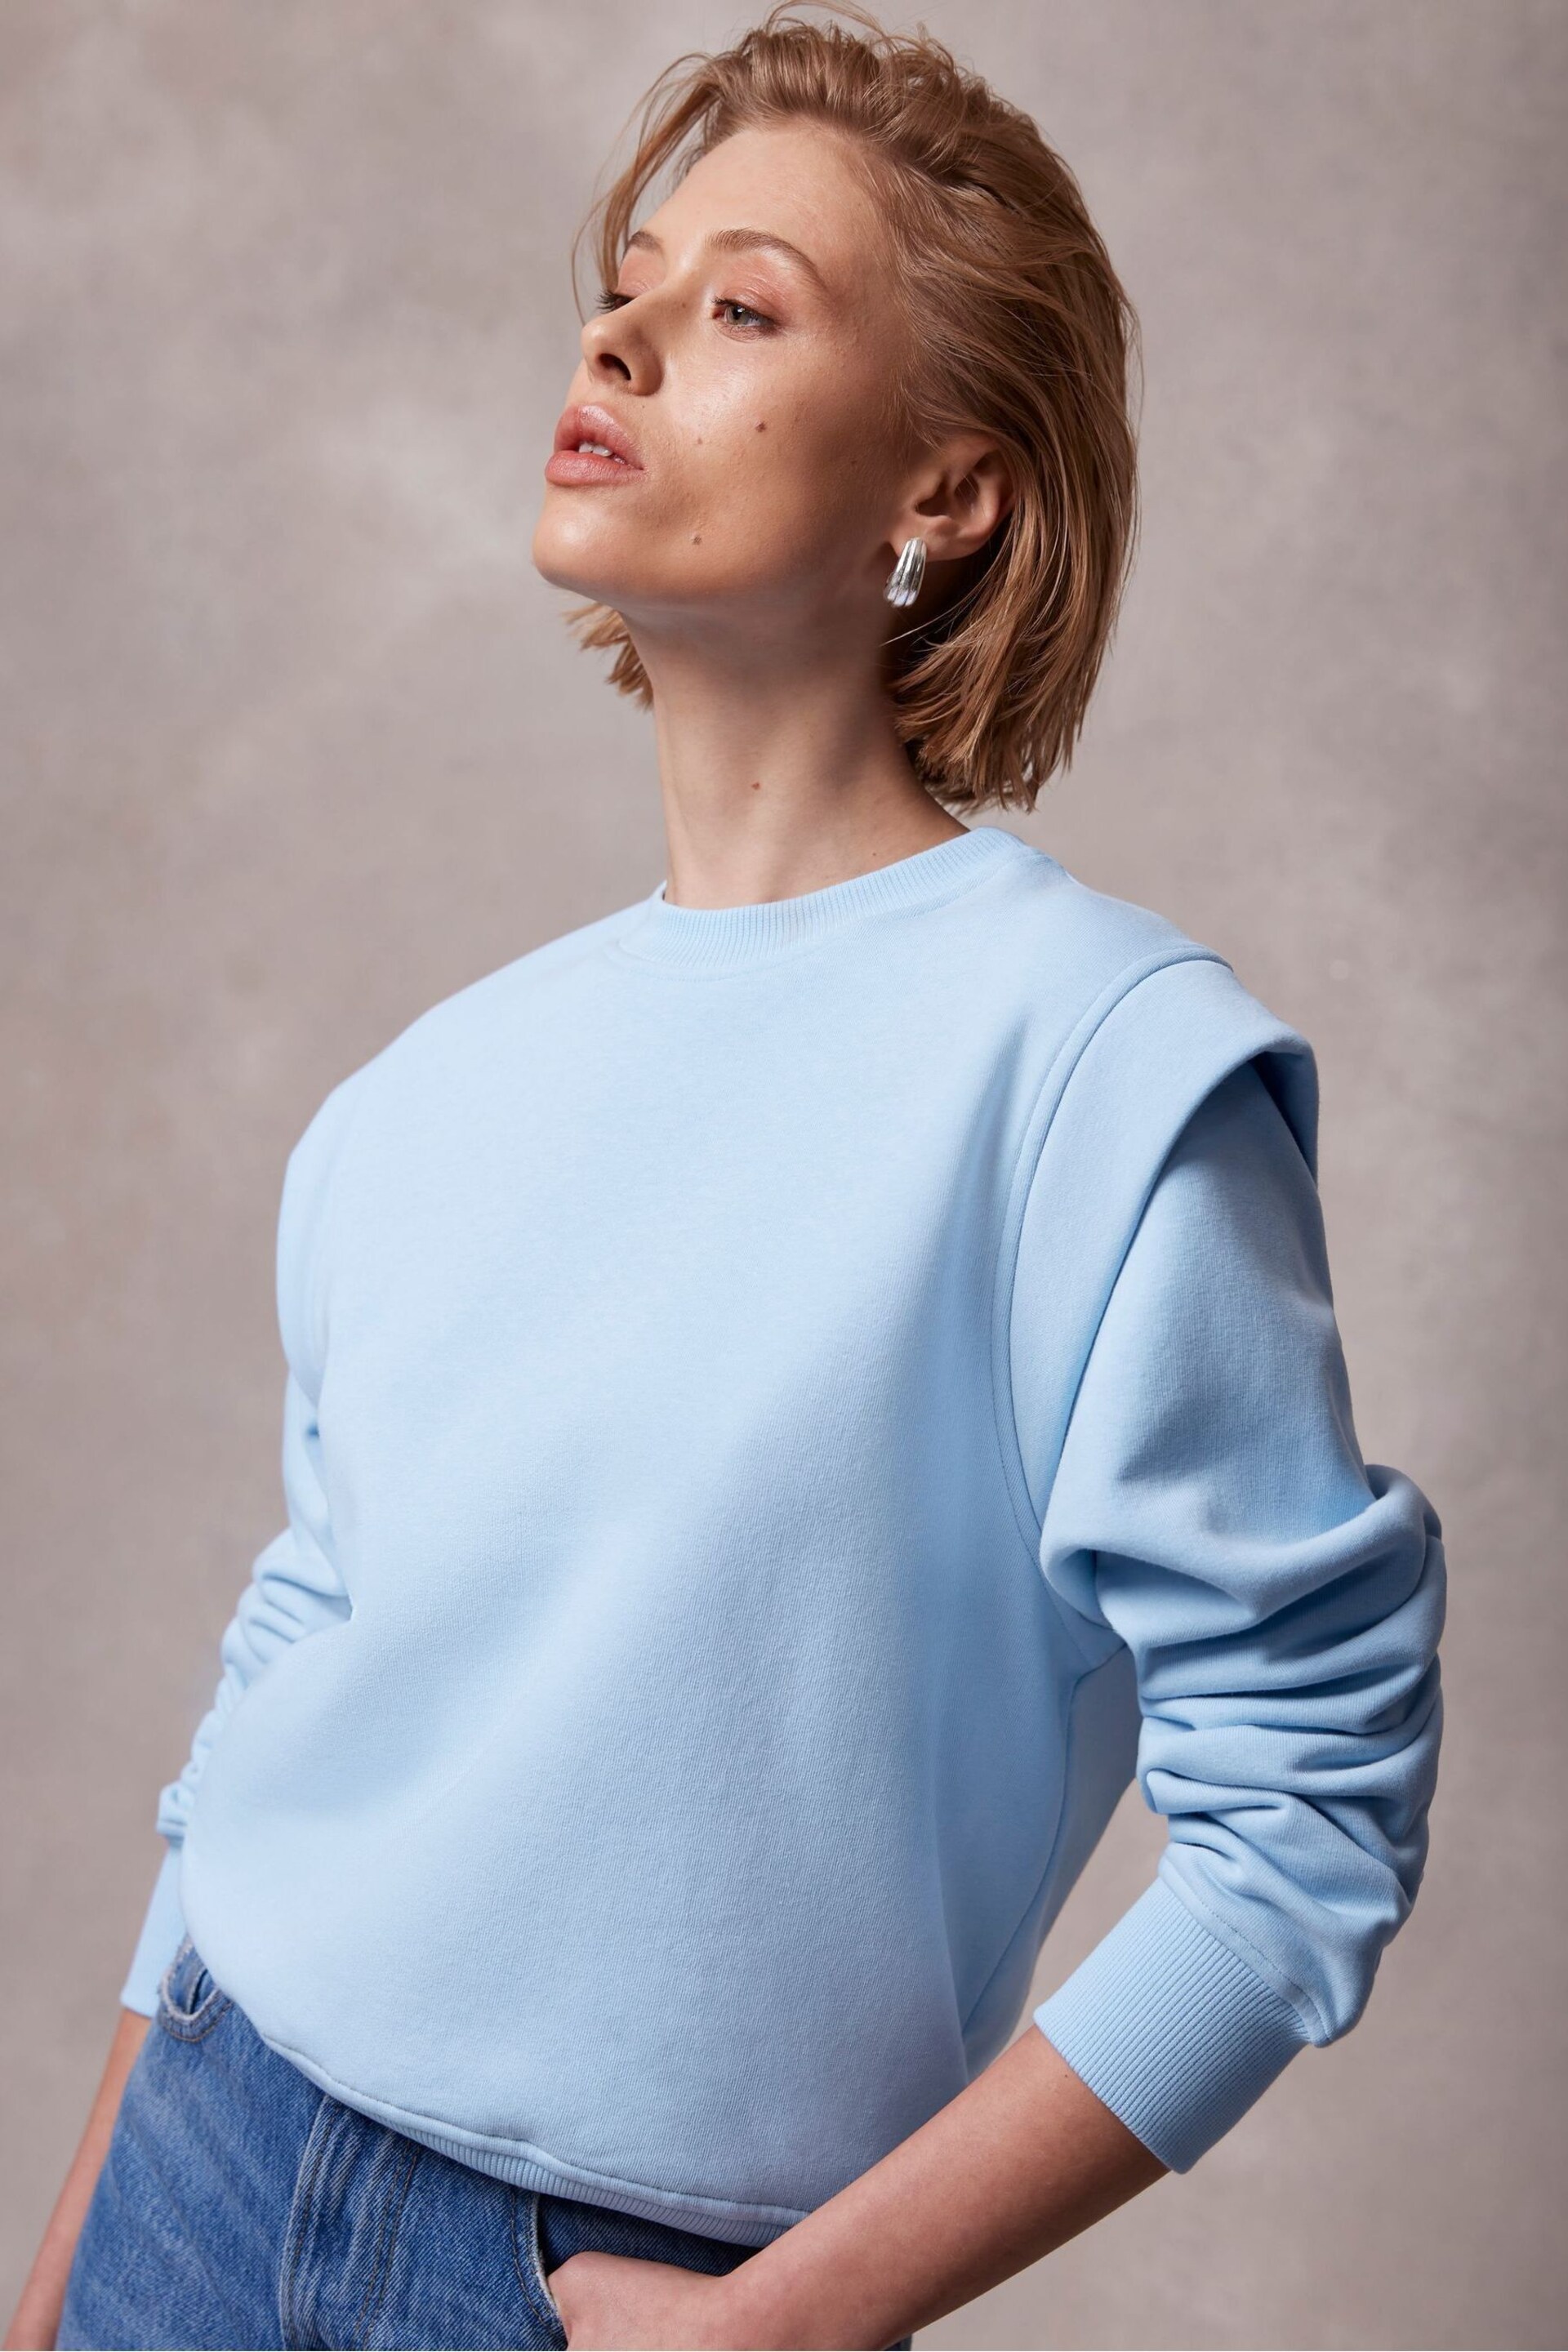 Mint Velvet Blue Cotton Sweatshirt - Image 2 of 4